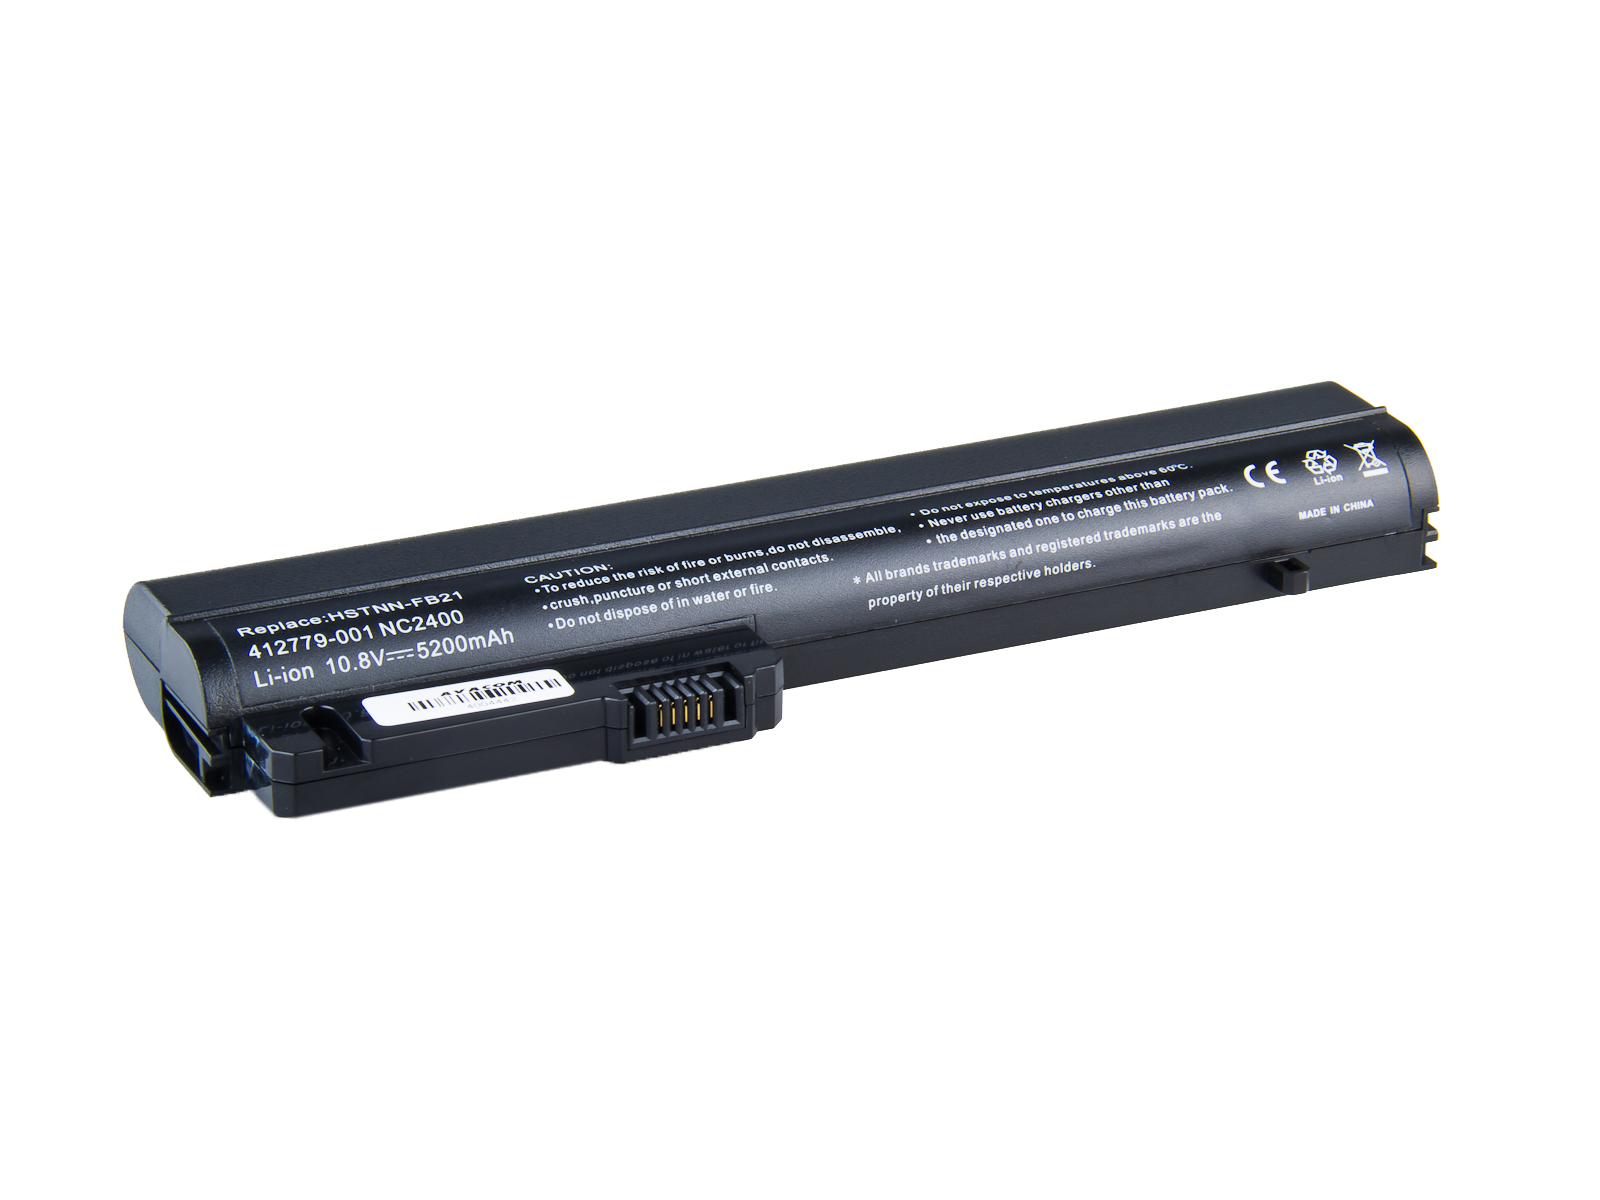 Avacom Baterie NOHP-240h-S26 pro HP Business Notebook 2400, nc2400, 2510p Li-Ion 10,8V 5200mAh